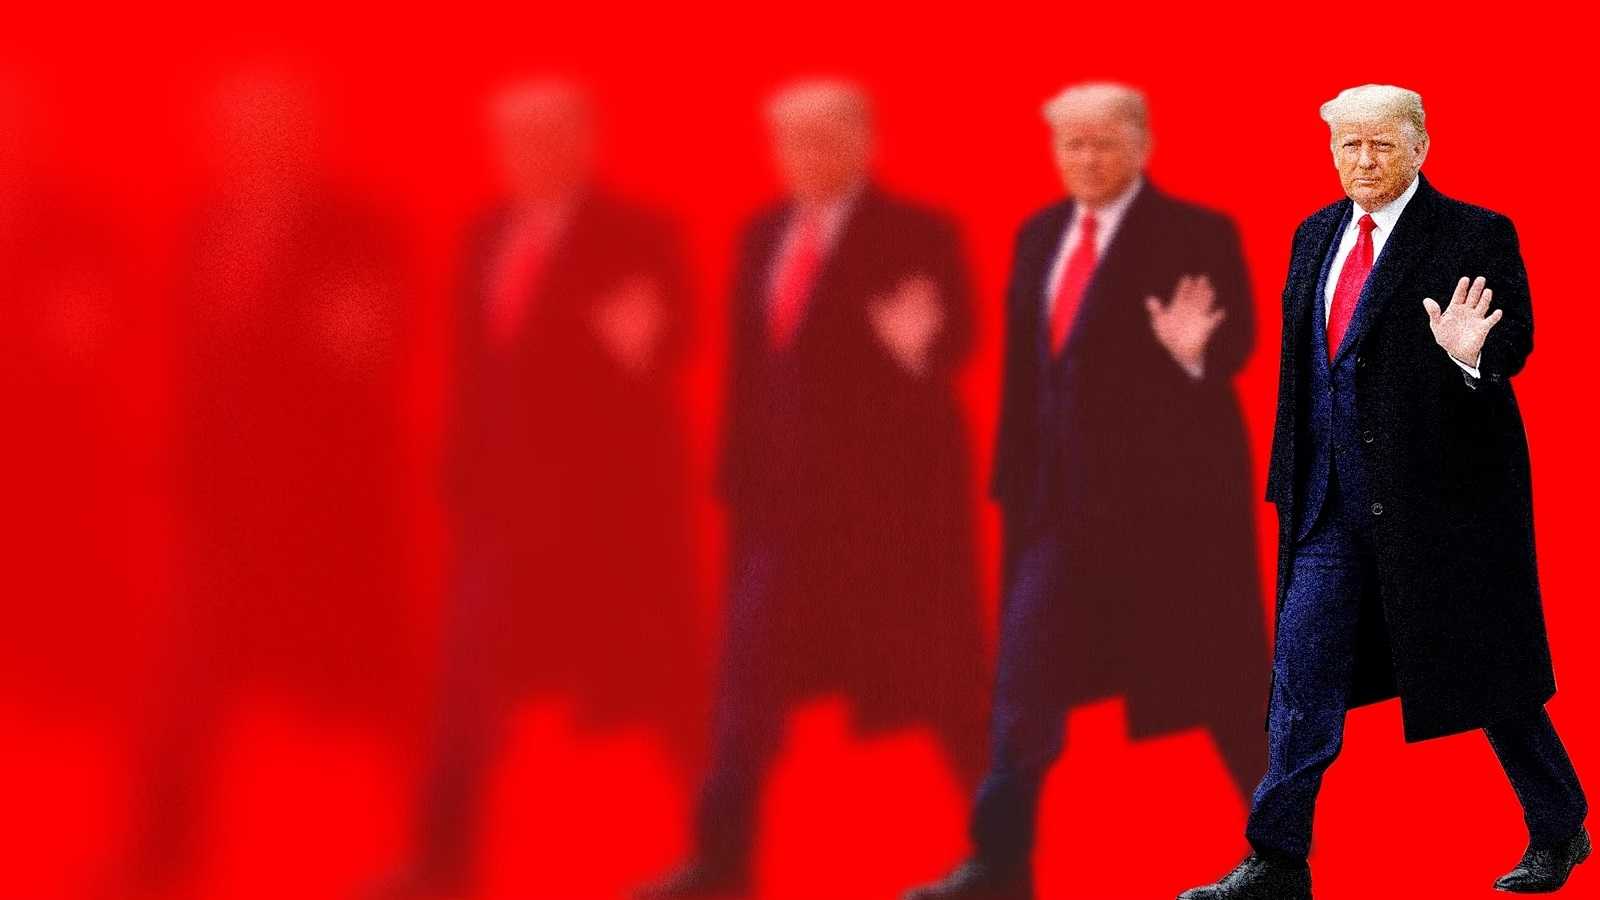 Trump 2024 Wallpaper Wallpaper Sun